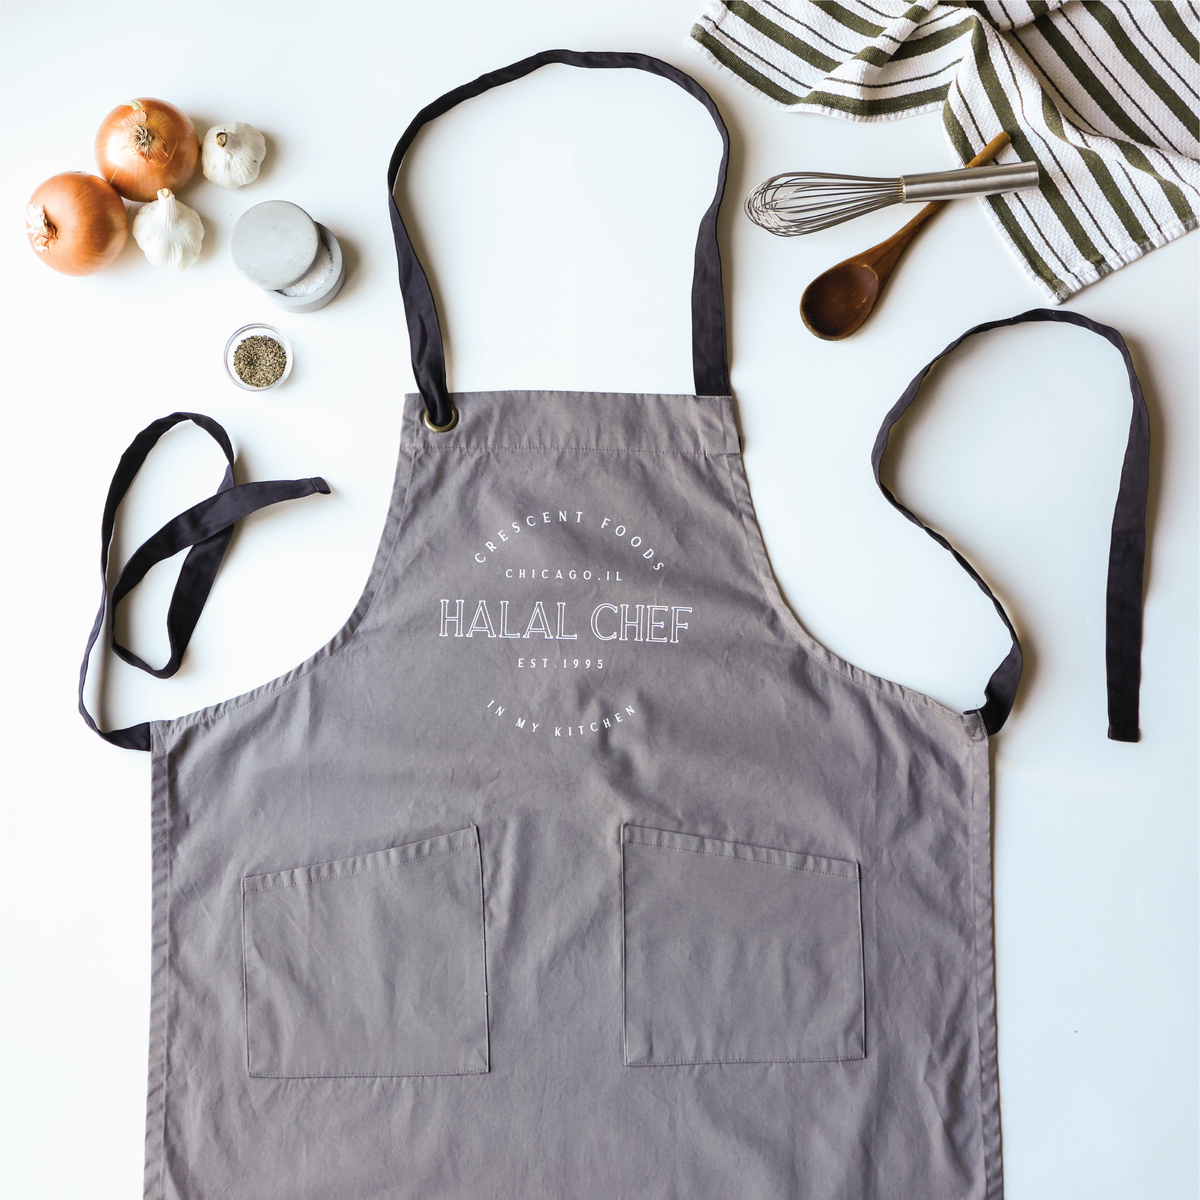 Halal Chef Apron | Crescent Foods